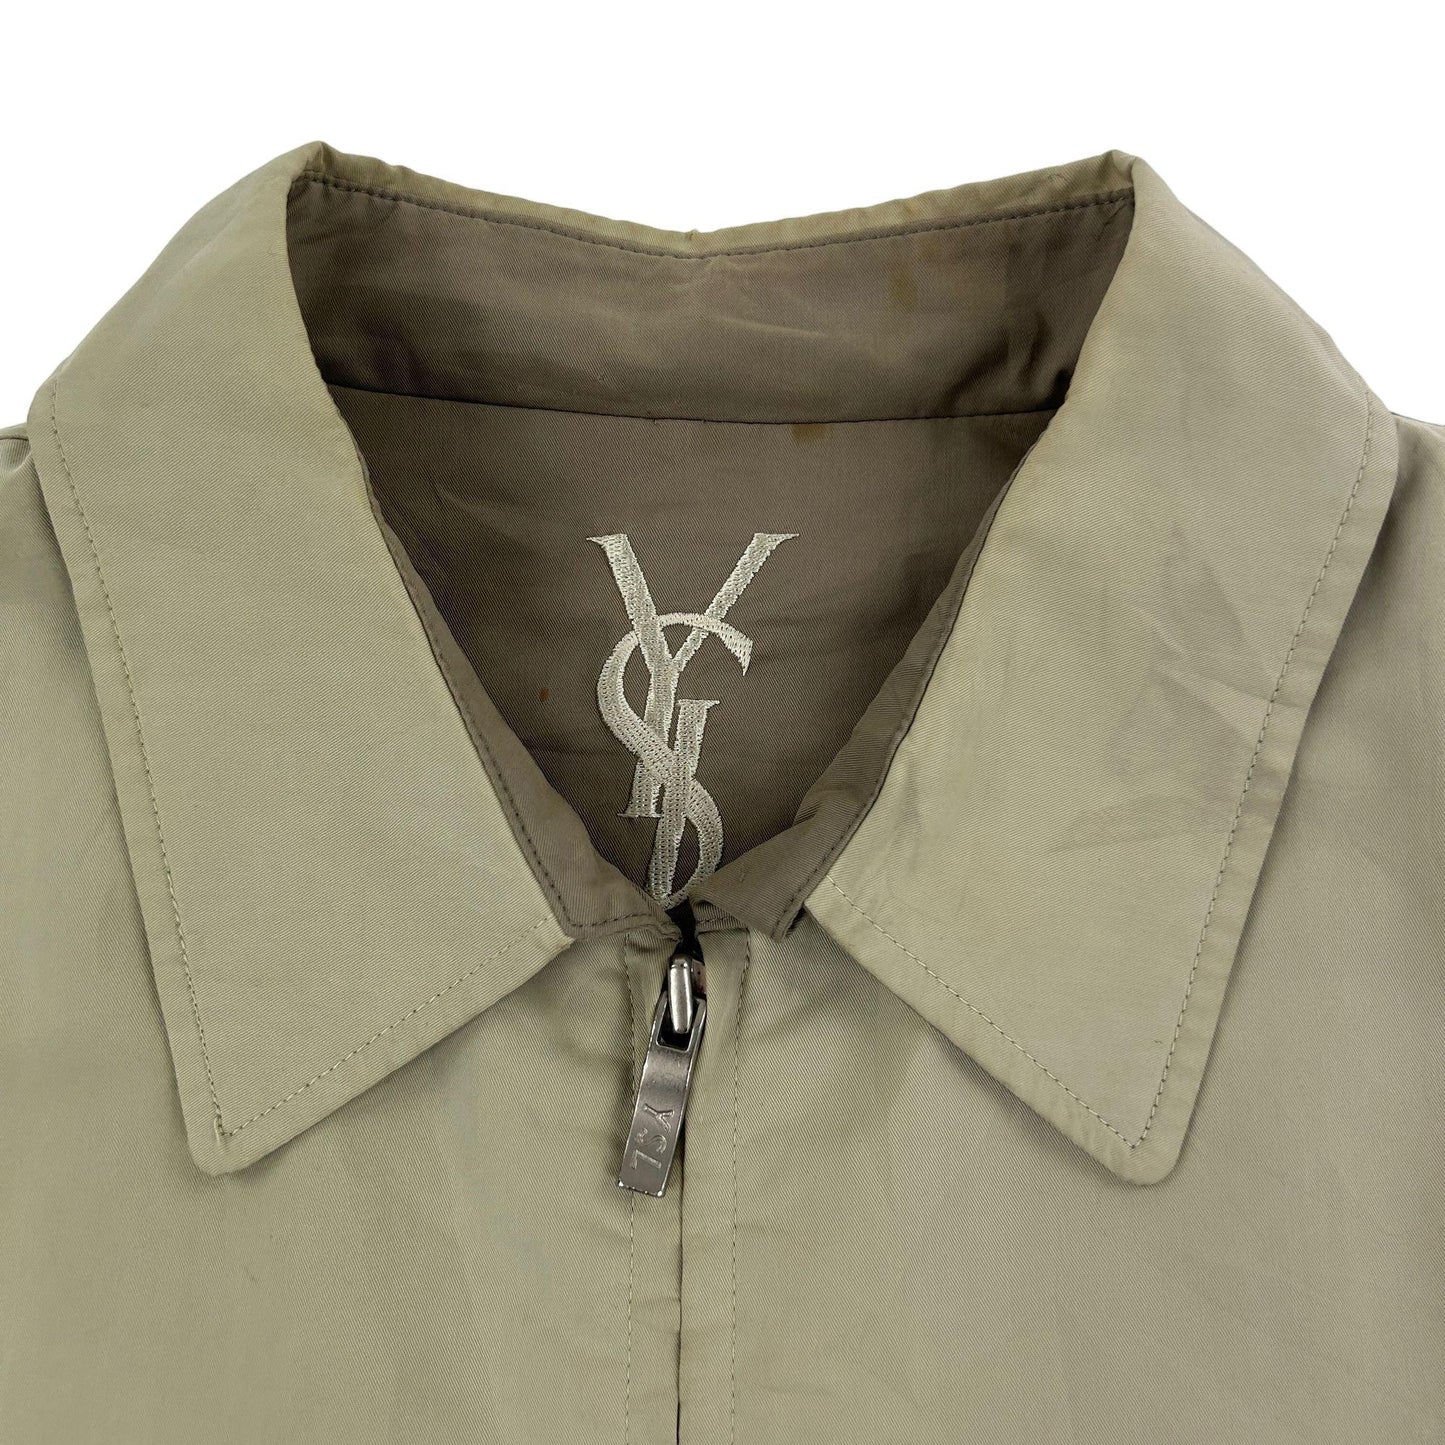 Vintage YSL Jacket Size L - Known Source